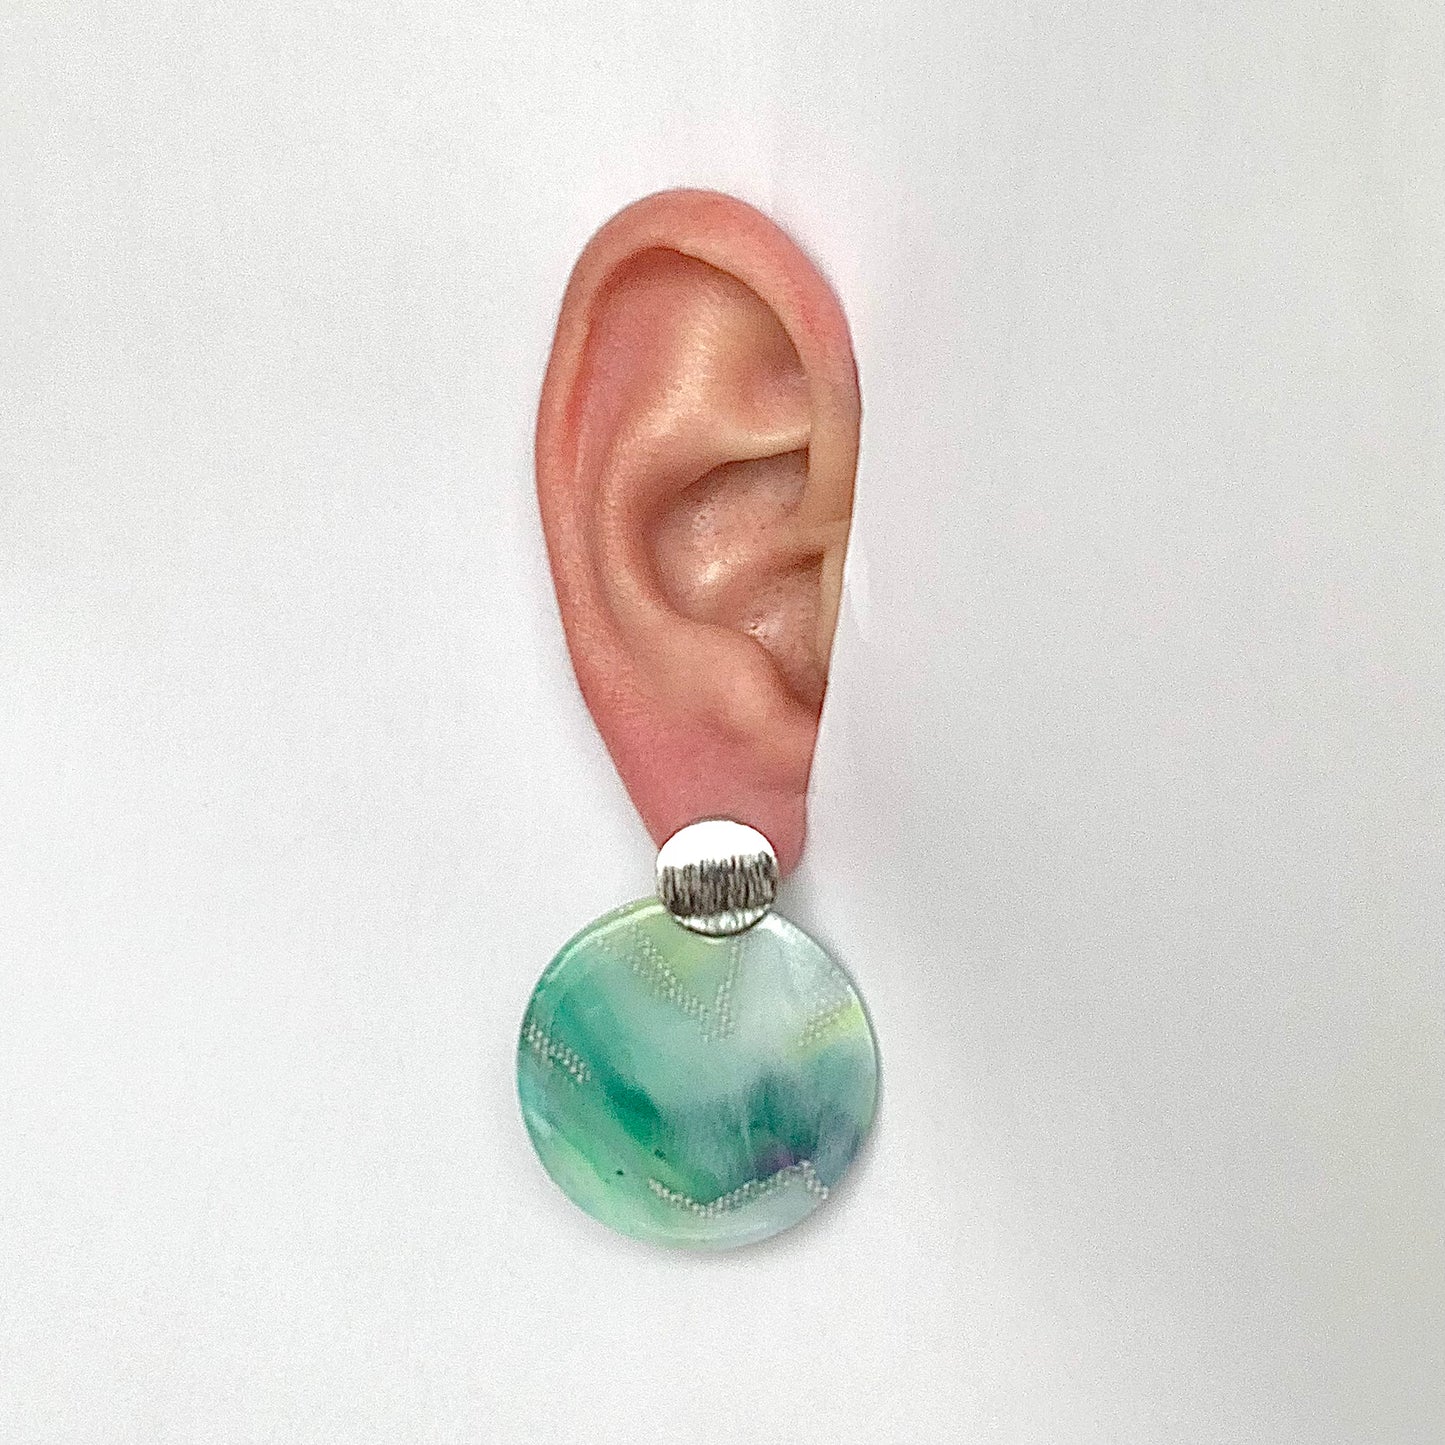 recycled plastic earrings studs green silver artesian handmade round